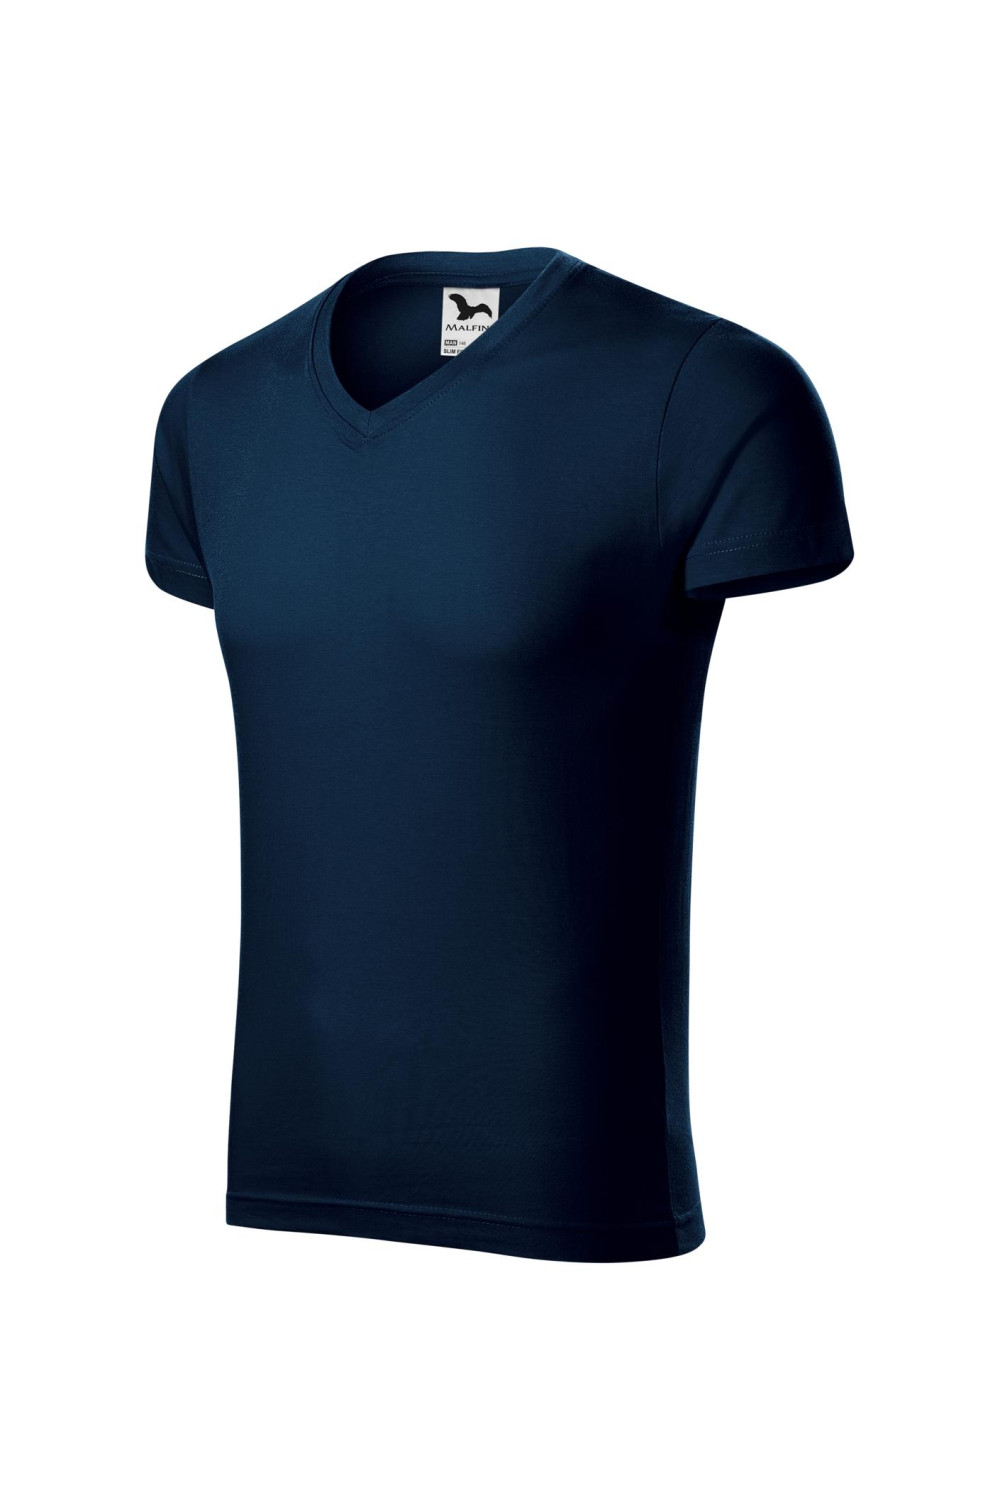 Koszulka męska 100% bawełna t-shirt SLIM FIT V-NECK 146 kolor granatowy